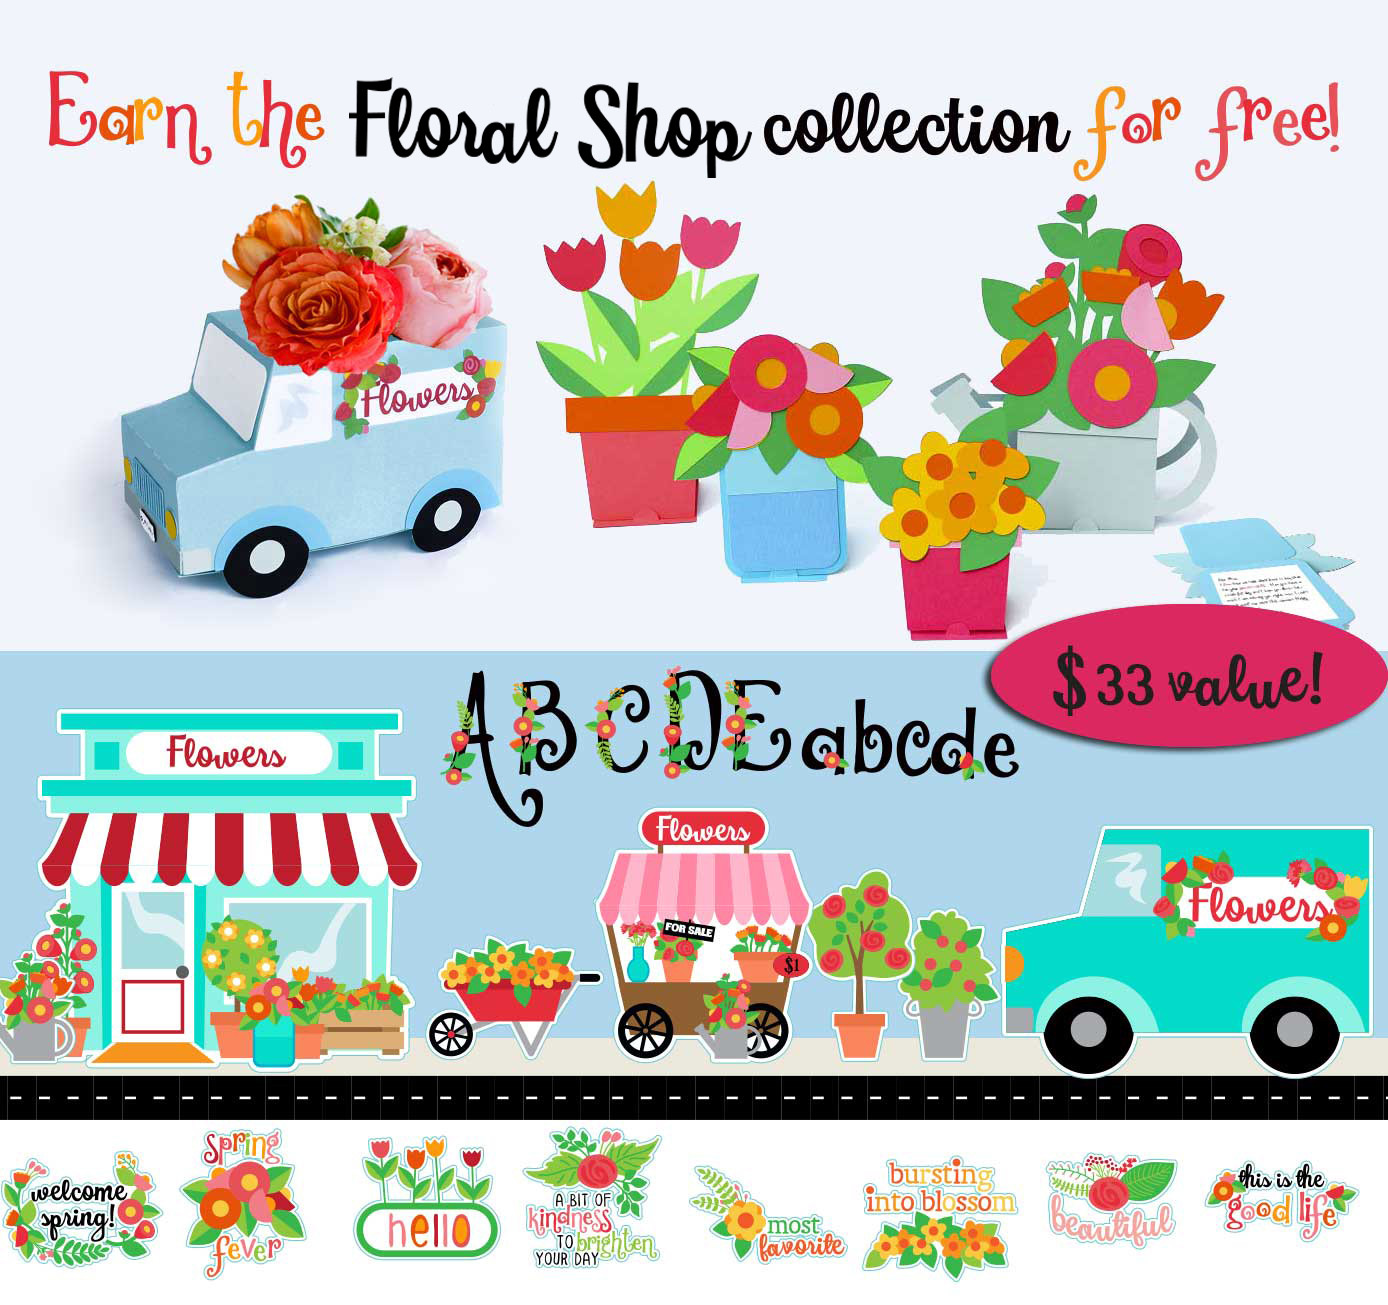 Earn the Floral Shop - Promotional Bundle - Free